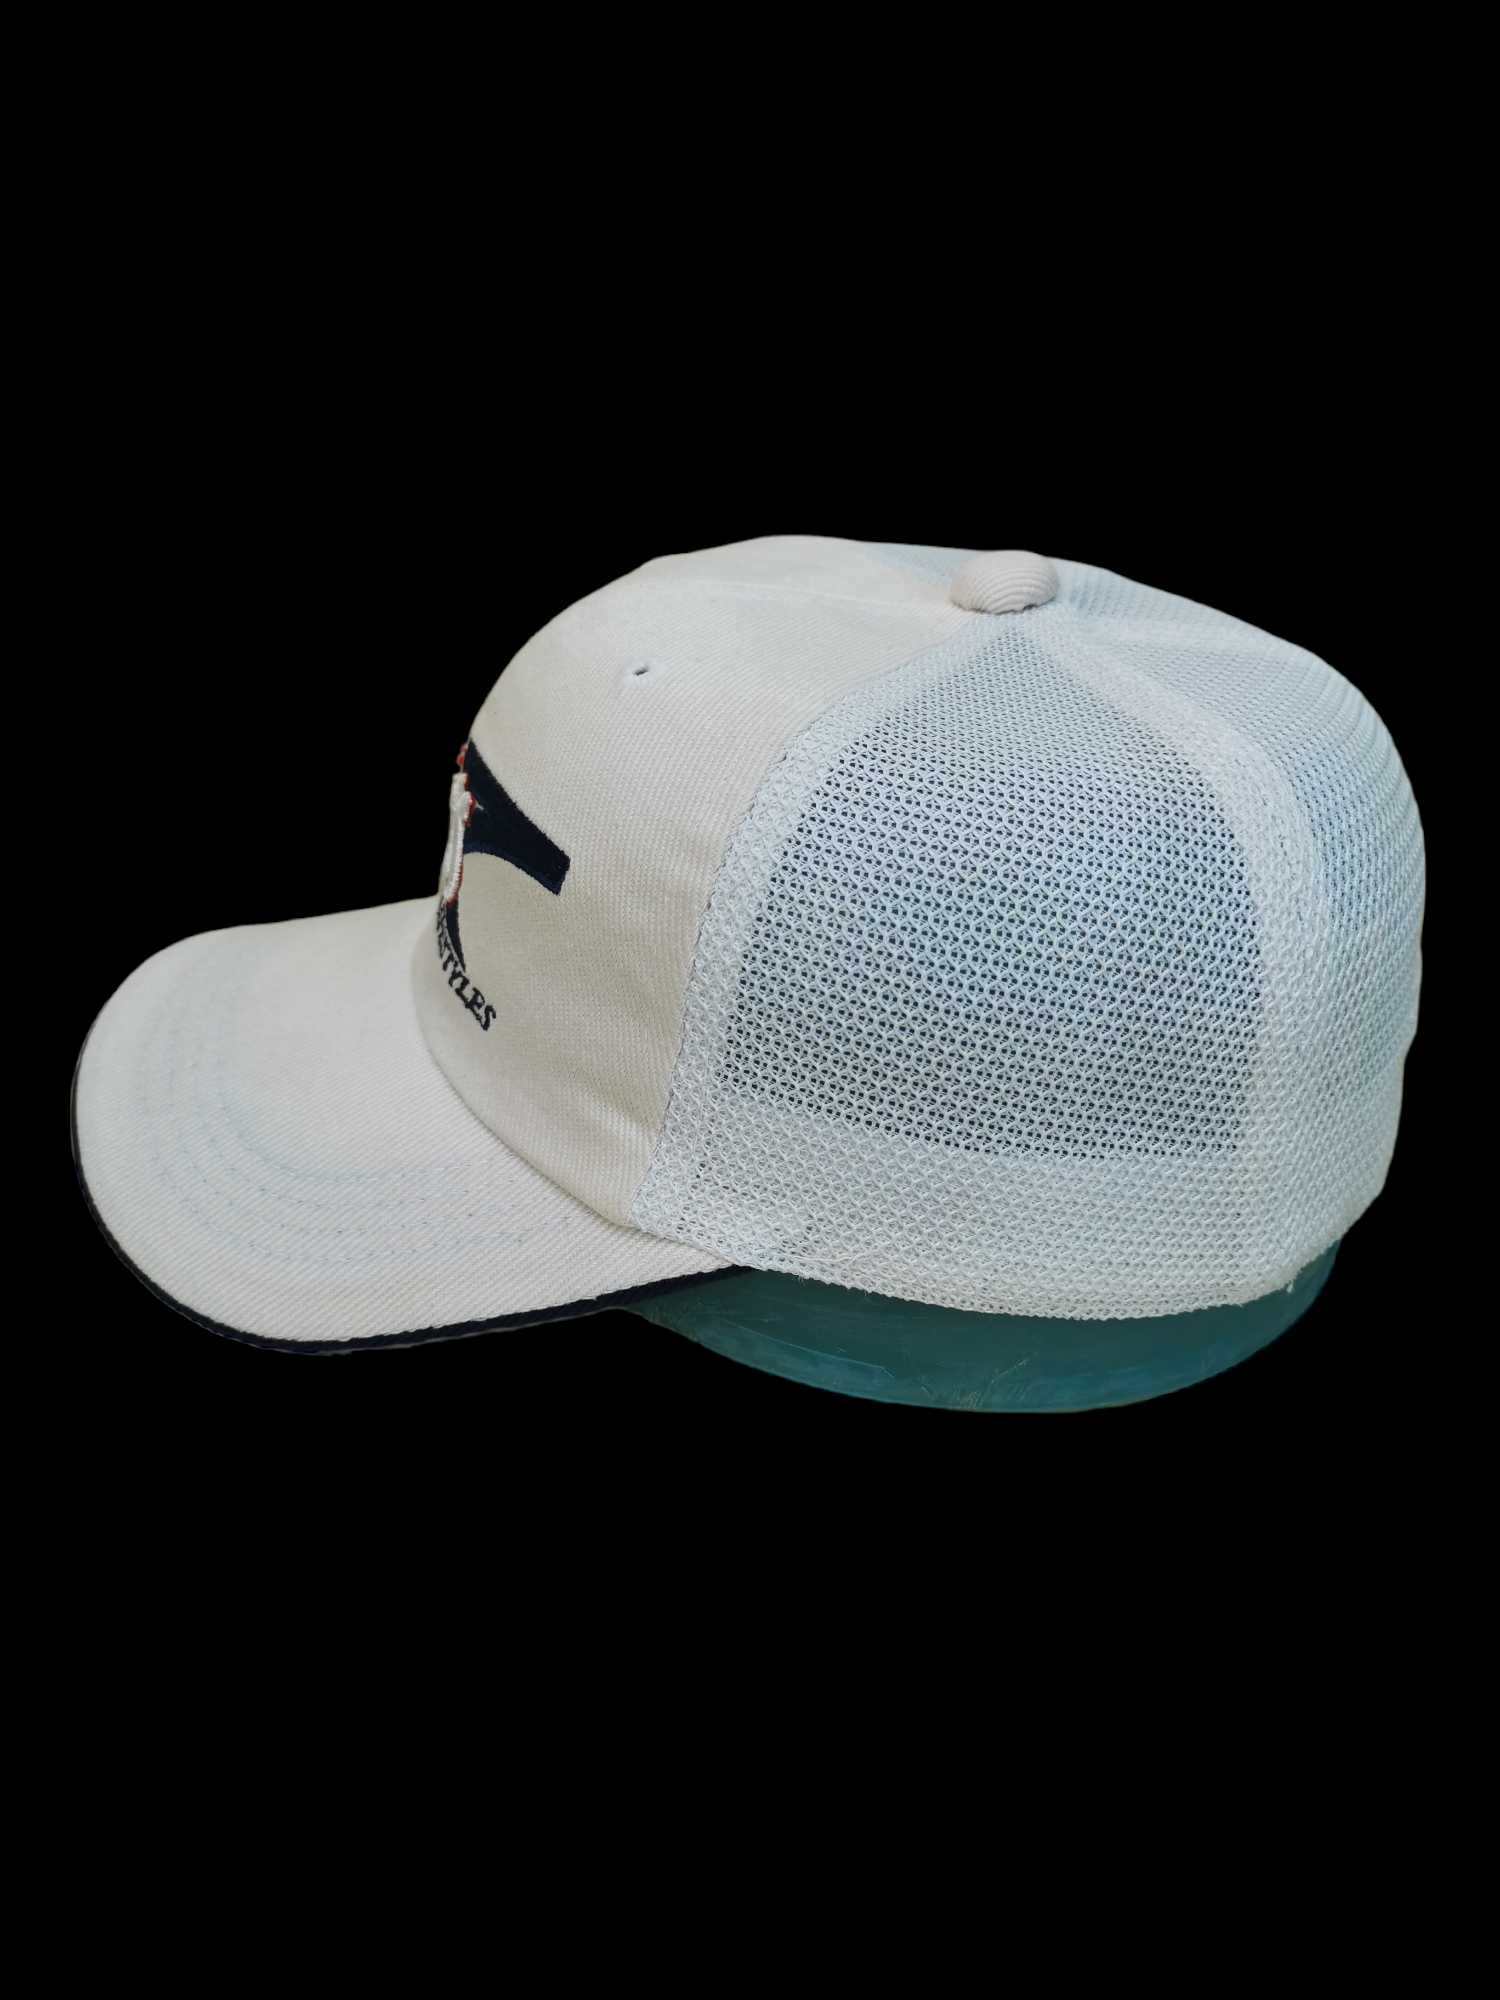 🔥FREE SHIPPING🔥 JAPANESE ASICS HAT CAP - 2